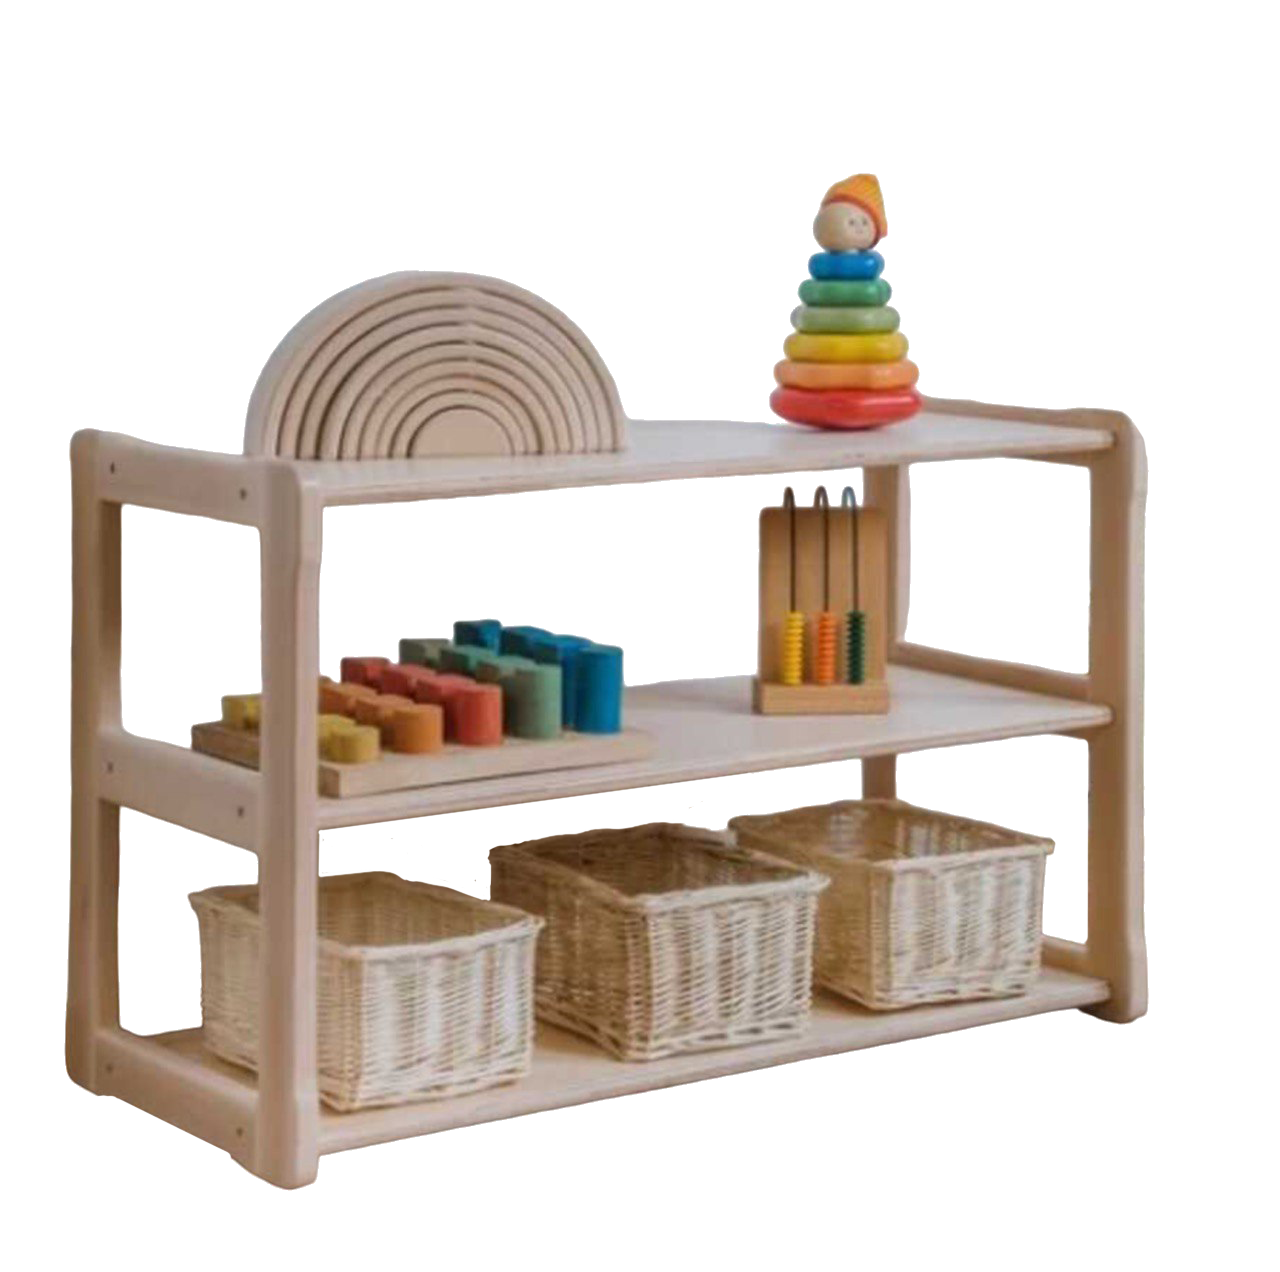 Montessori children's room furniture